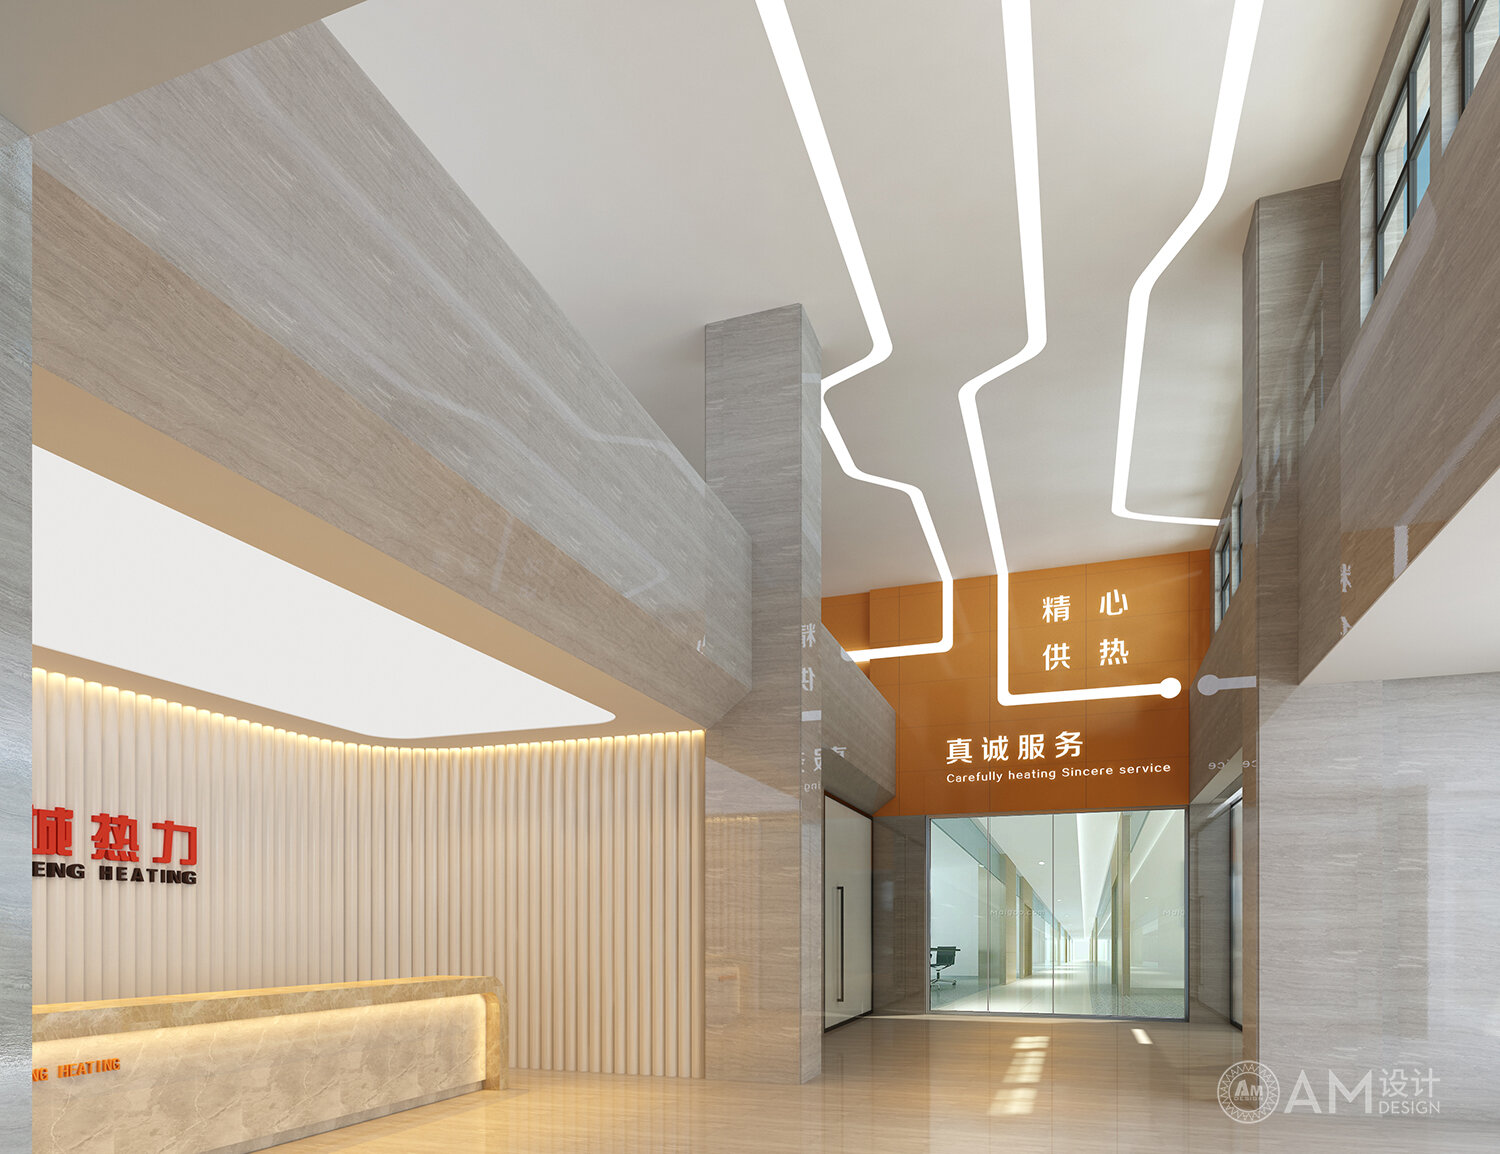 AM DESIGN | Front desk design of Beijing Xincheng Thermal Office Building